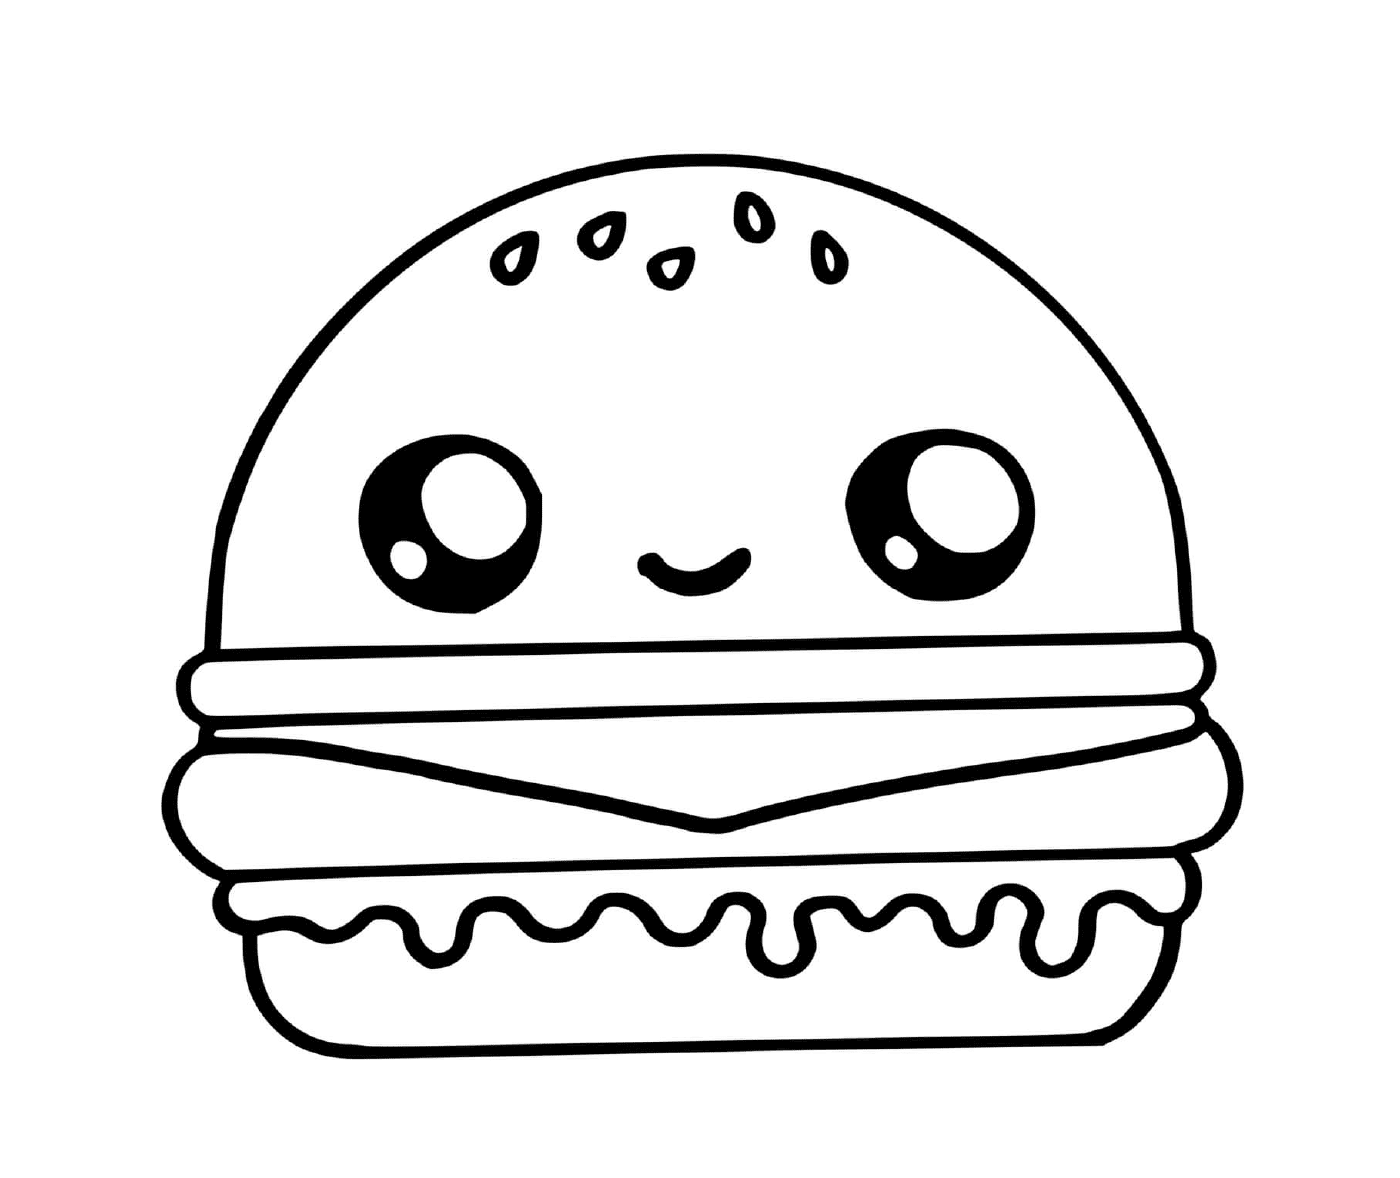  Um hambúrguer 